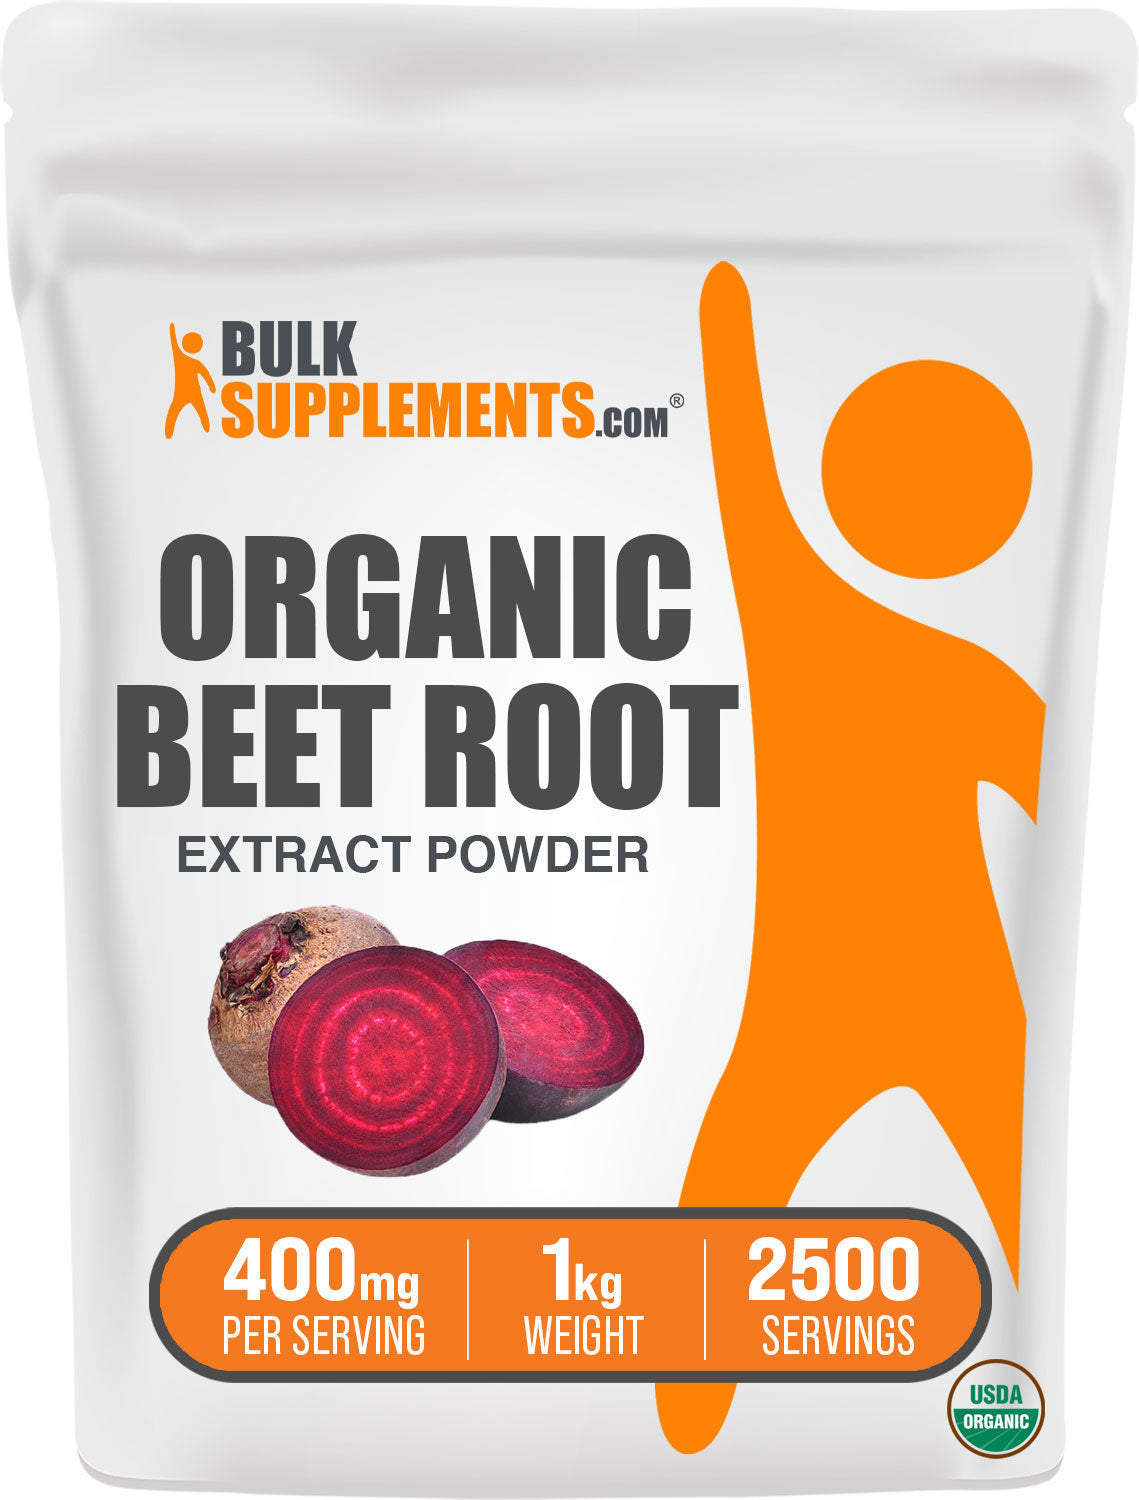 Organic Beet Root Extract Powder 1kg Bag